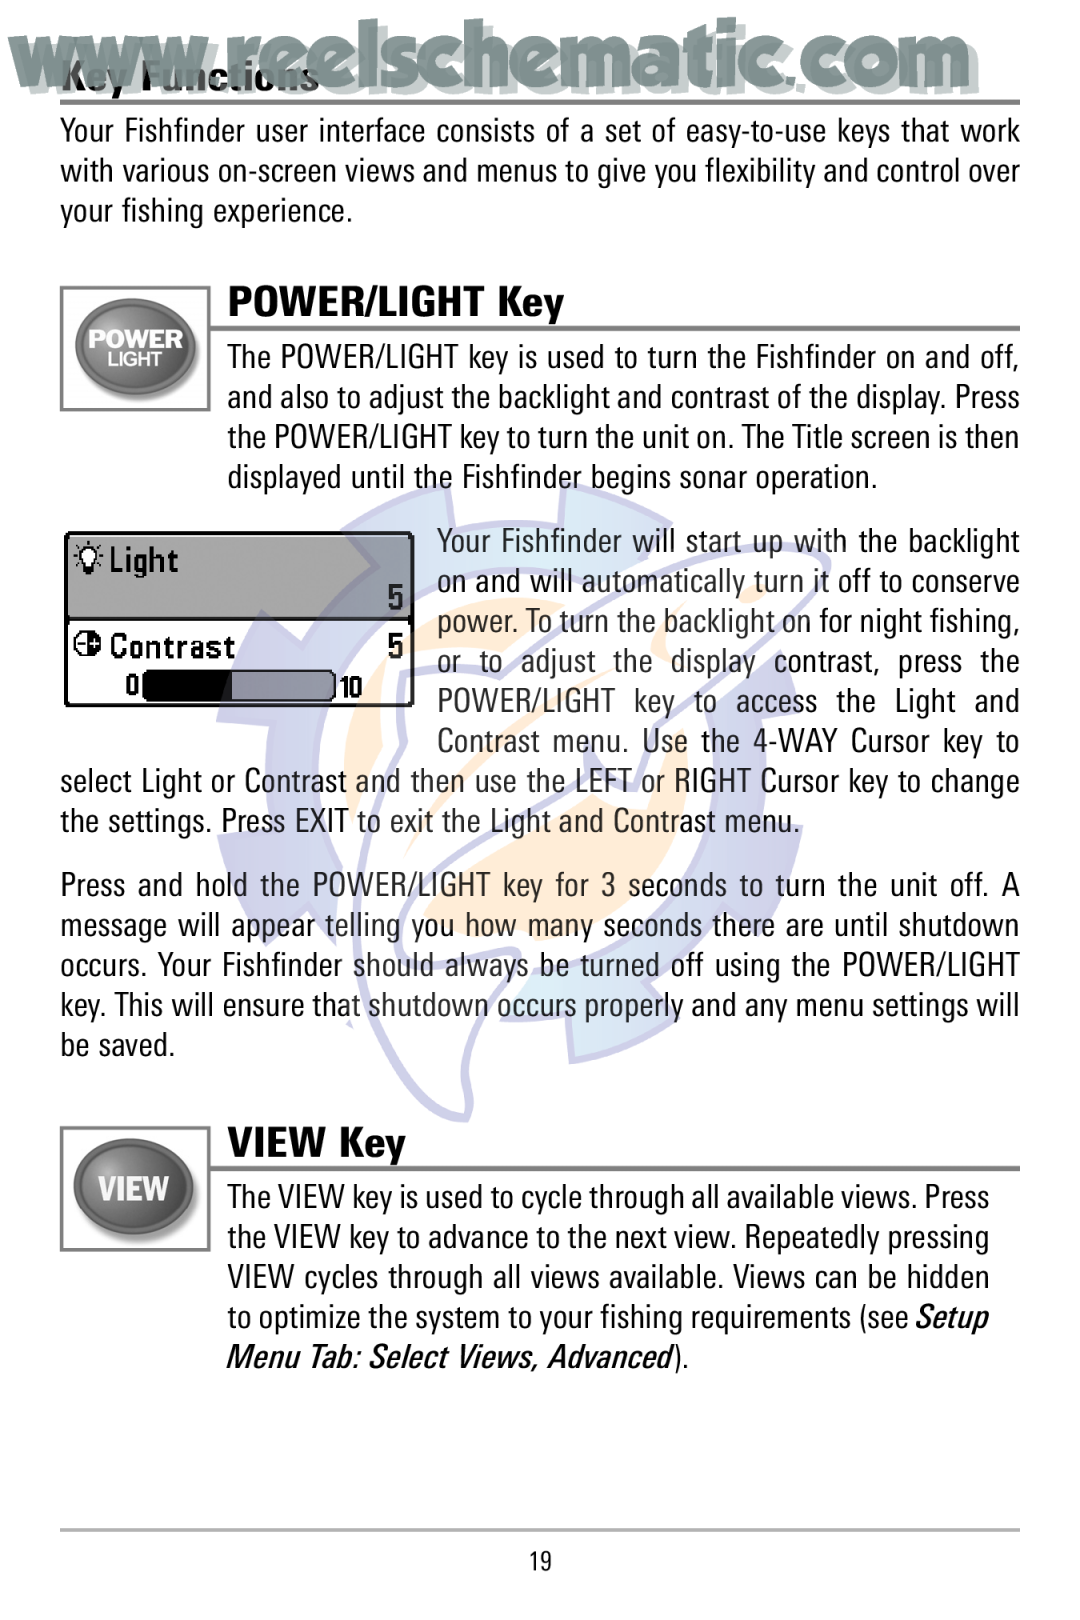 Humminbird 500 manual wwwKey Functions..reelschematic..com, POWER/LIGHT Key, VIEW Key 